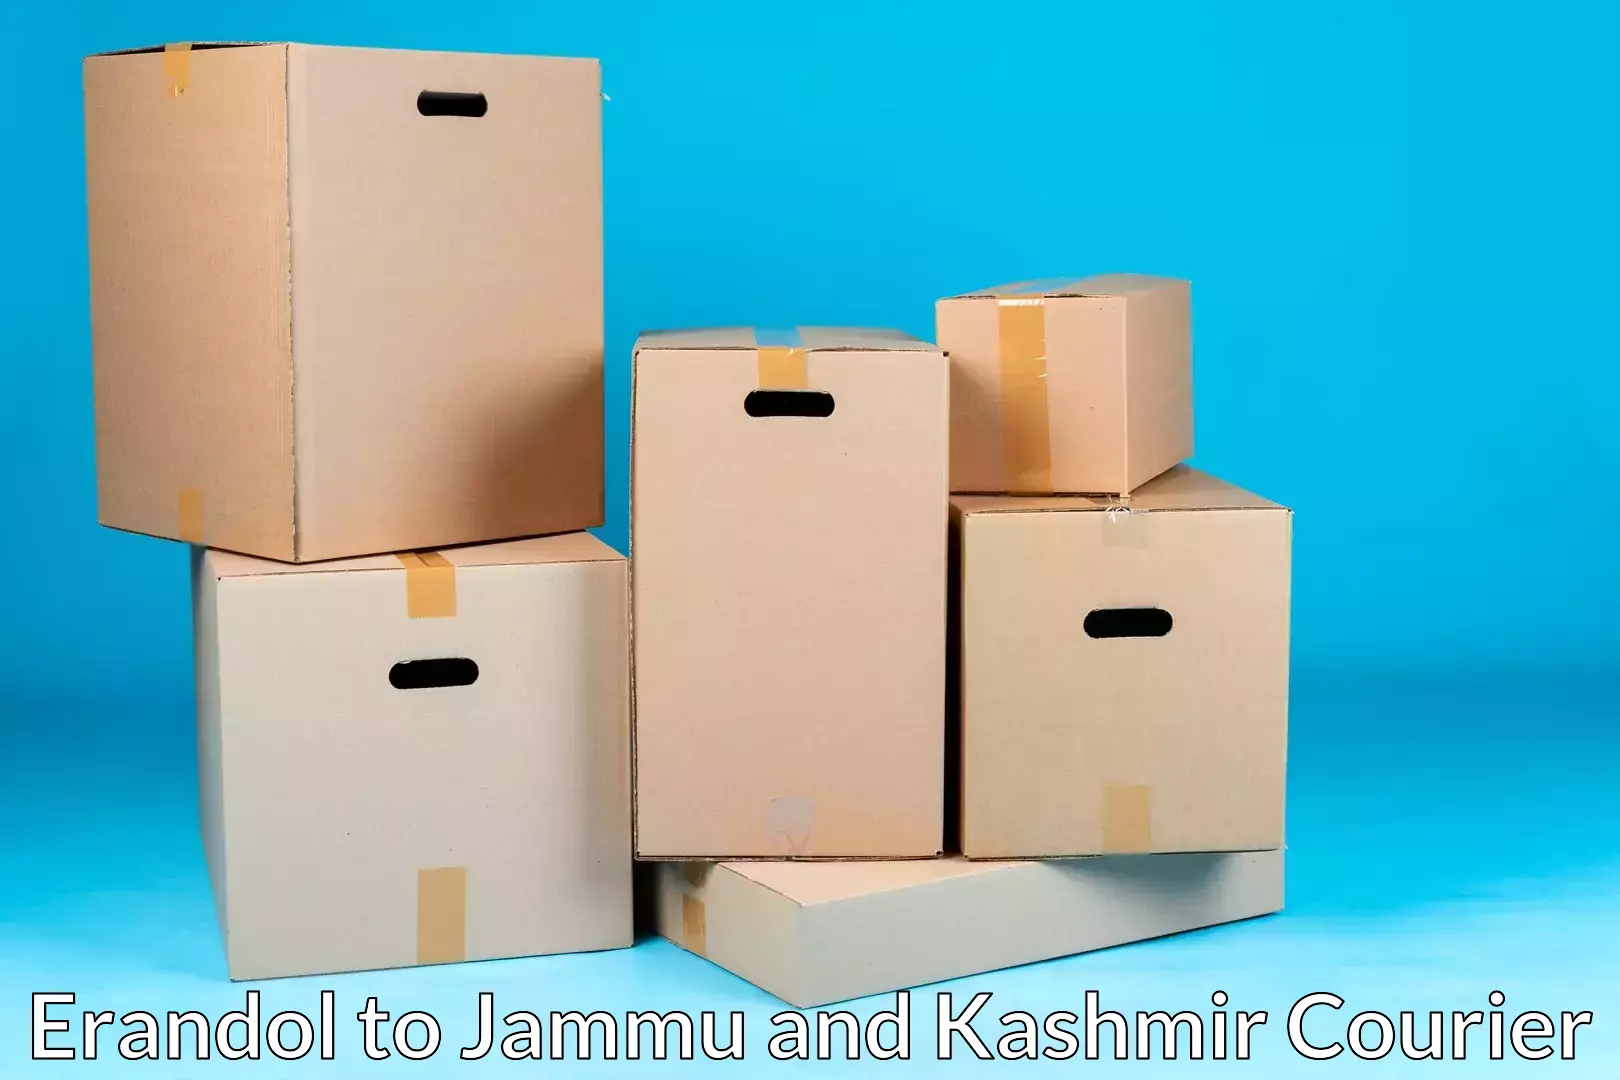 Professional moving assistance Erandol to Srinagar Kashmir